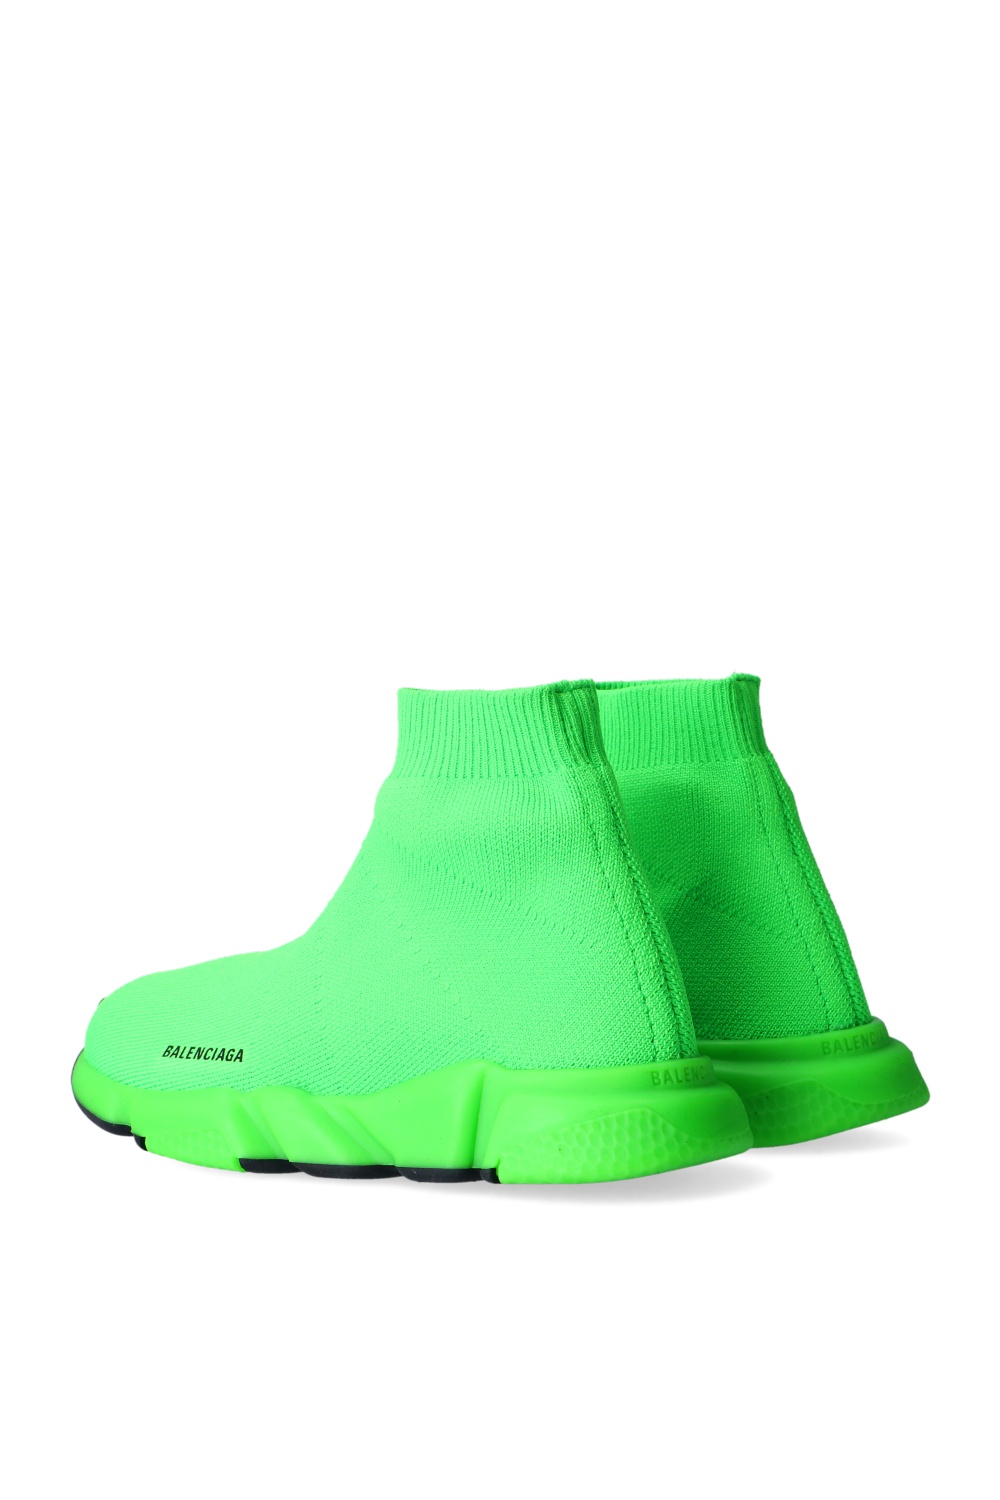 Balenciaga Kids ‘Speed’ sock sneakers